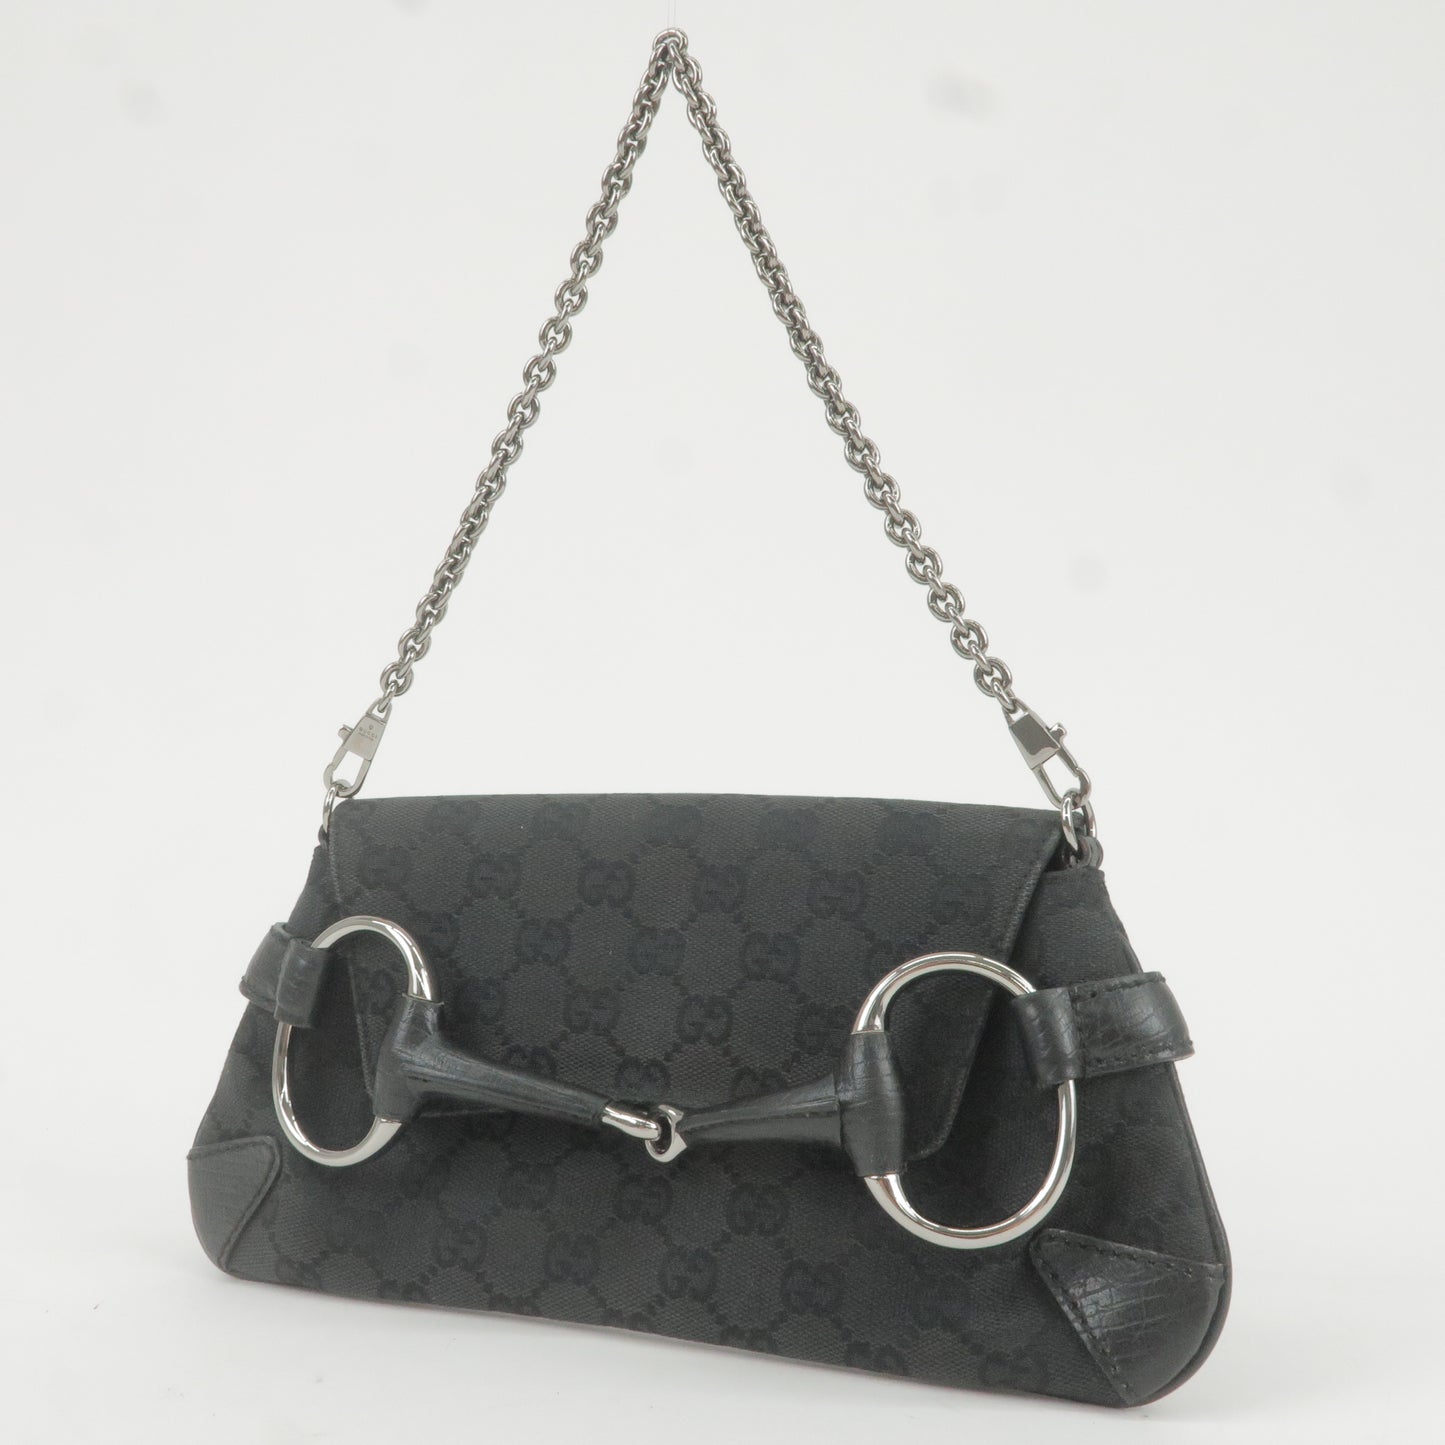 GUCCI Horsebit GG Canvas Leather Chain Shoulder Bag Black 114923